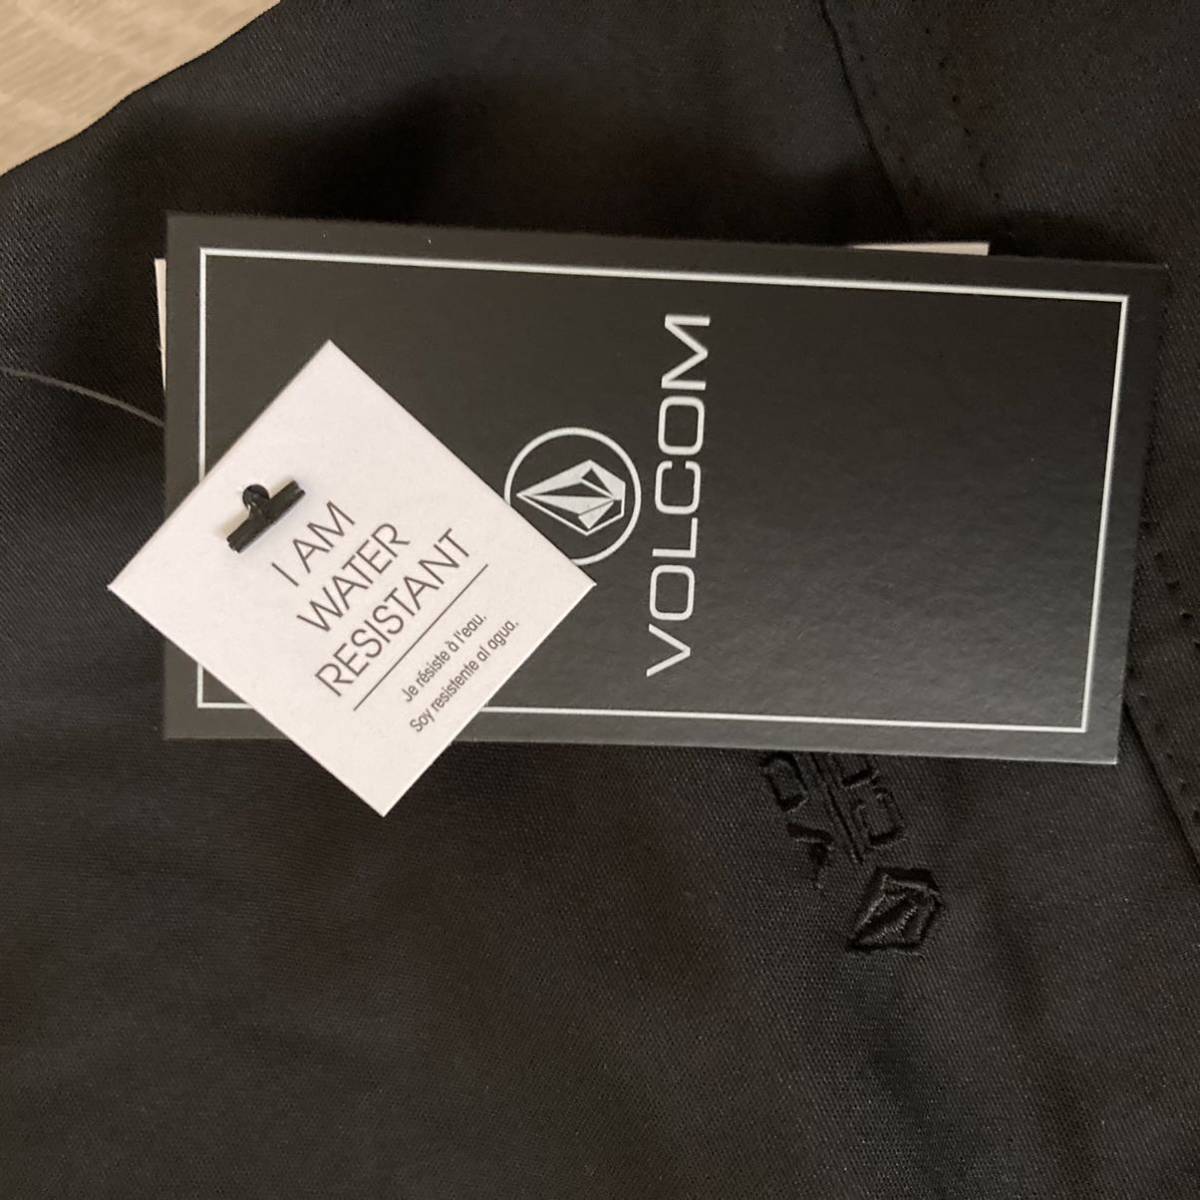 VOLCOM Volcom lady's nylon jacket Wind breaker S size black 